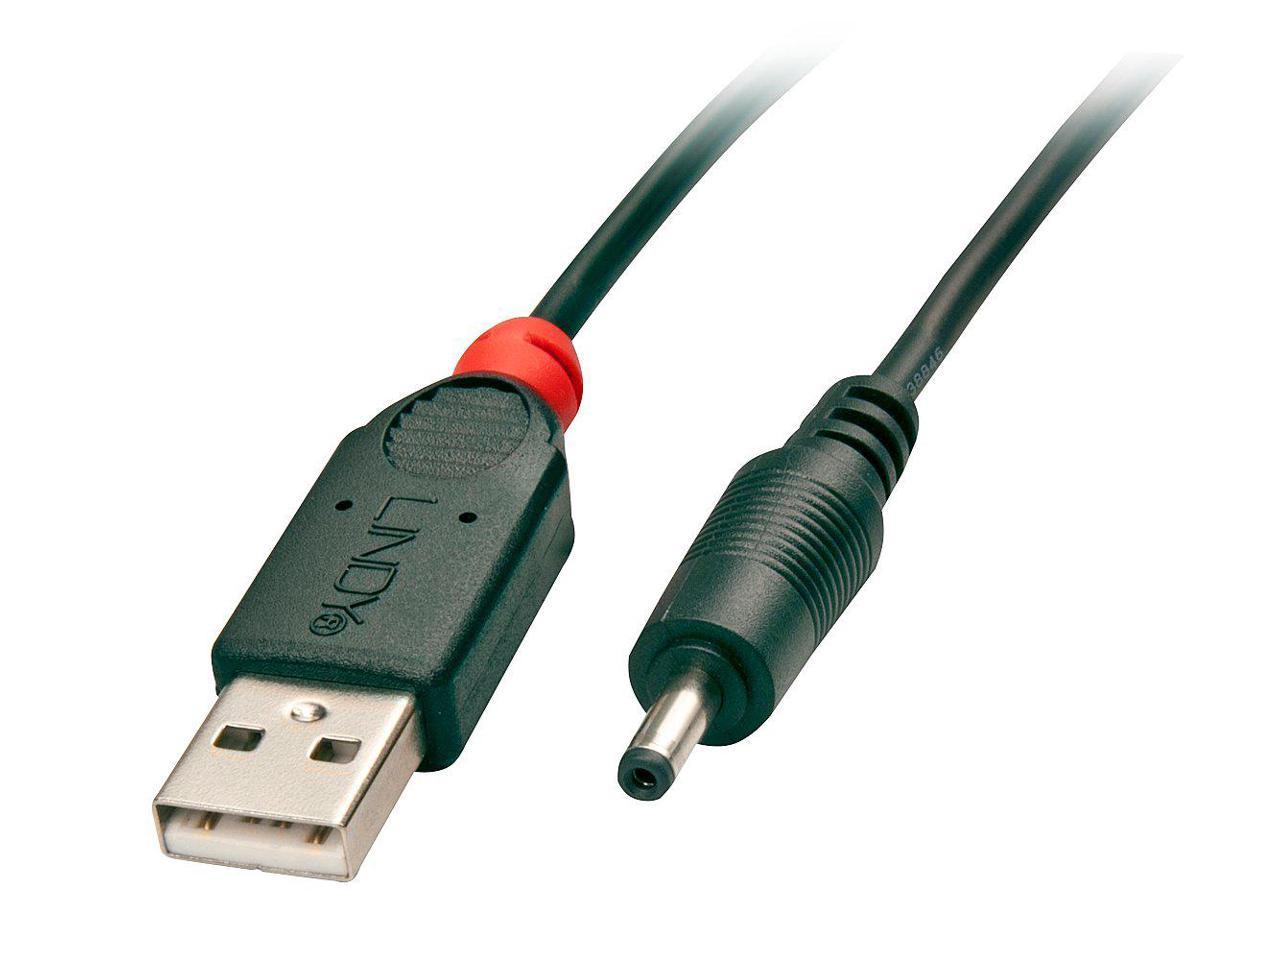 yan USB PC Computer Data Sync Cable Cord Wire for Nikon D7100 Df DSLR Camera Photo 